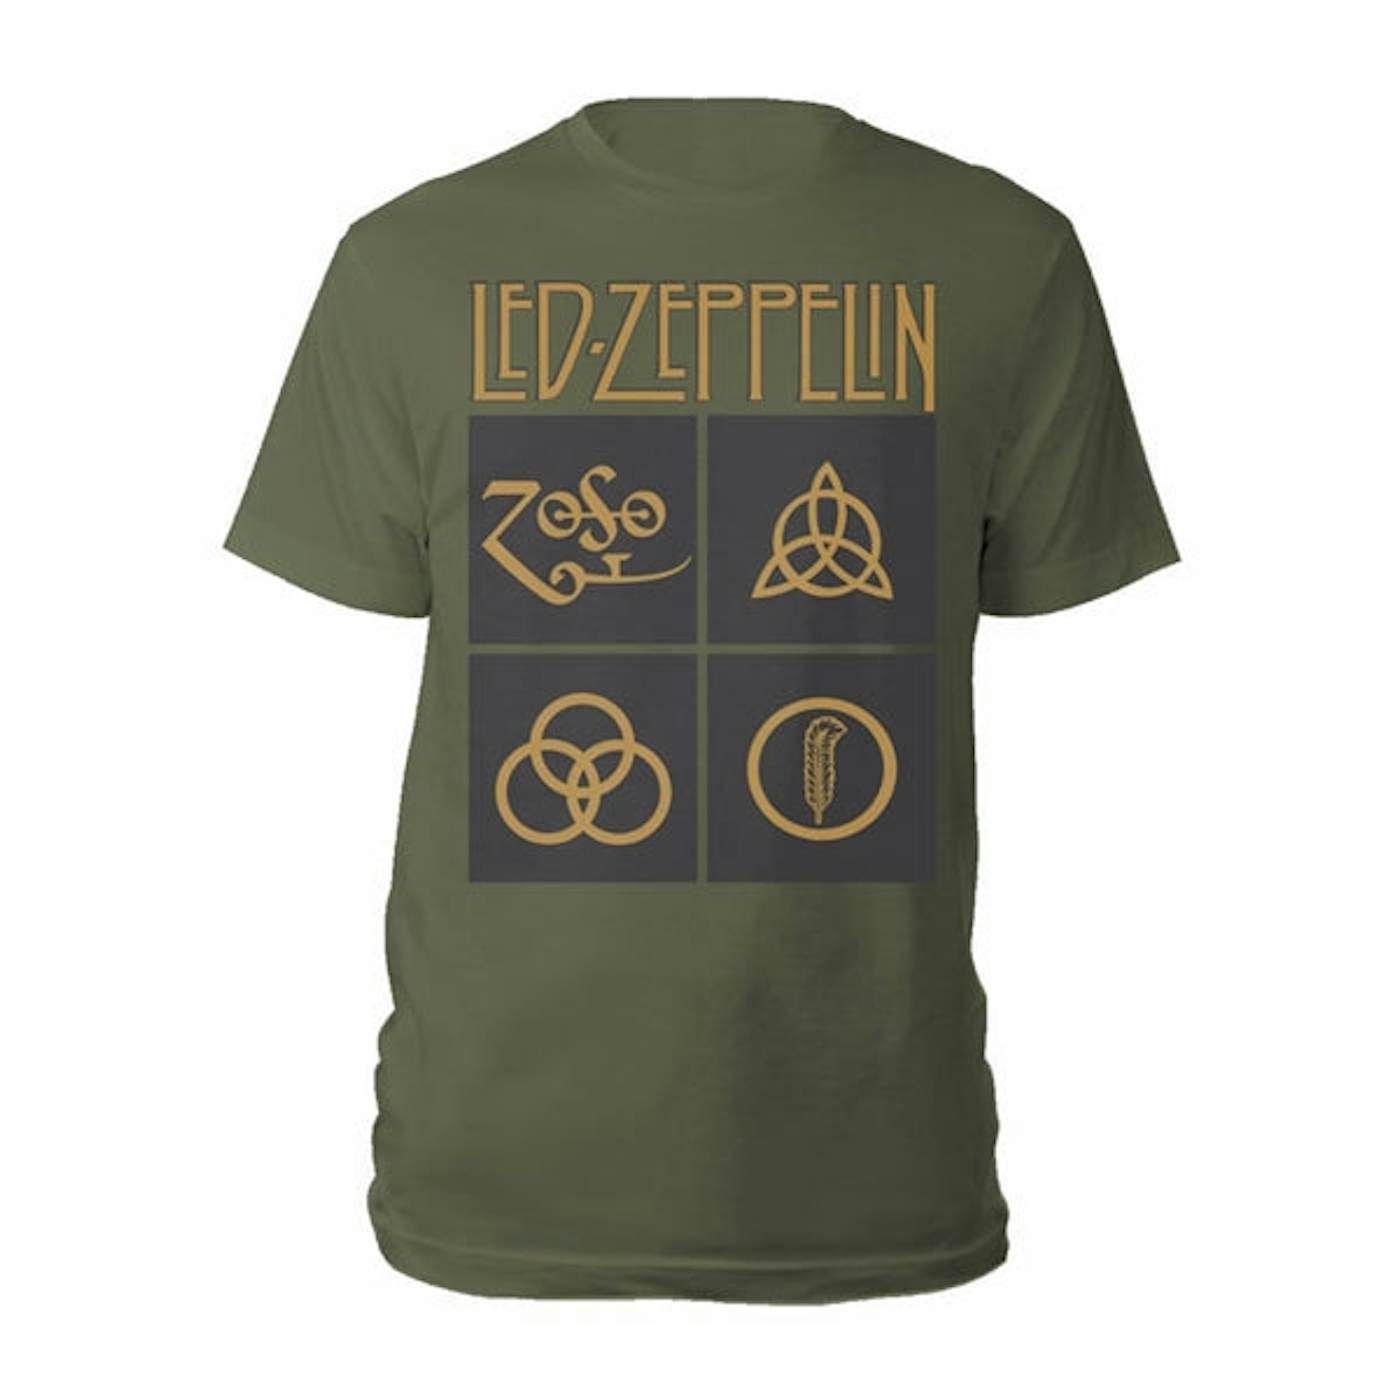 Led Zeppelin T Shirt - Gold Symbols & Black Squares